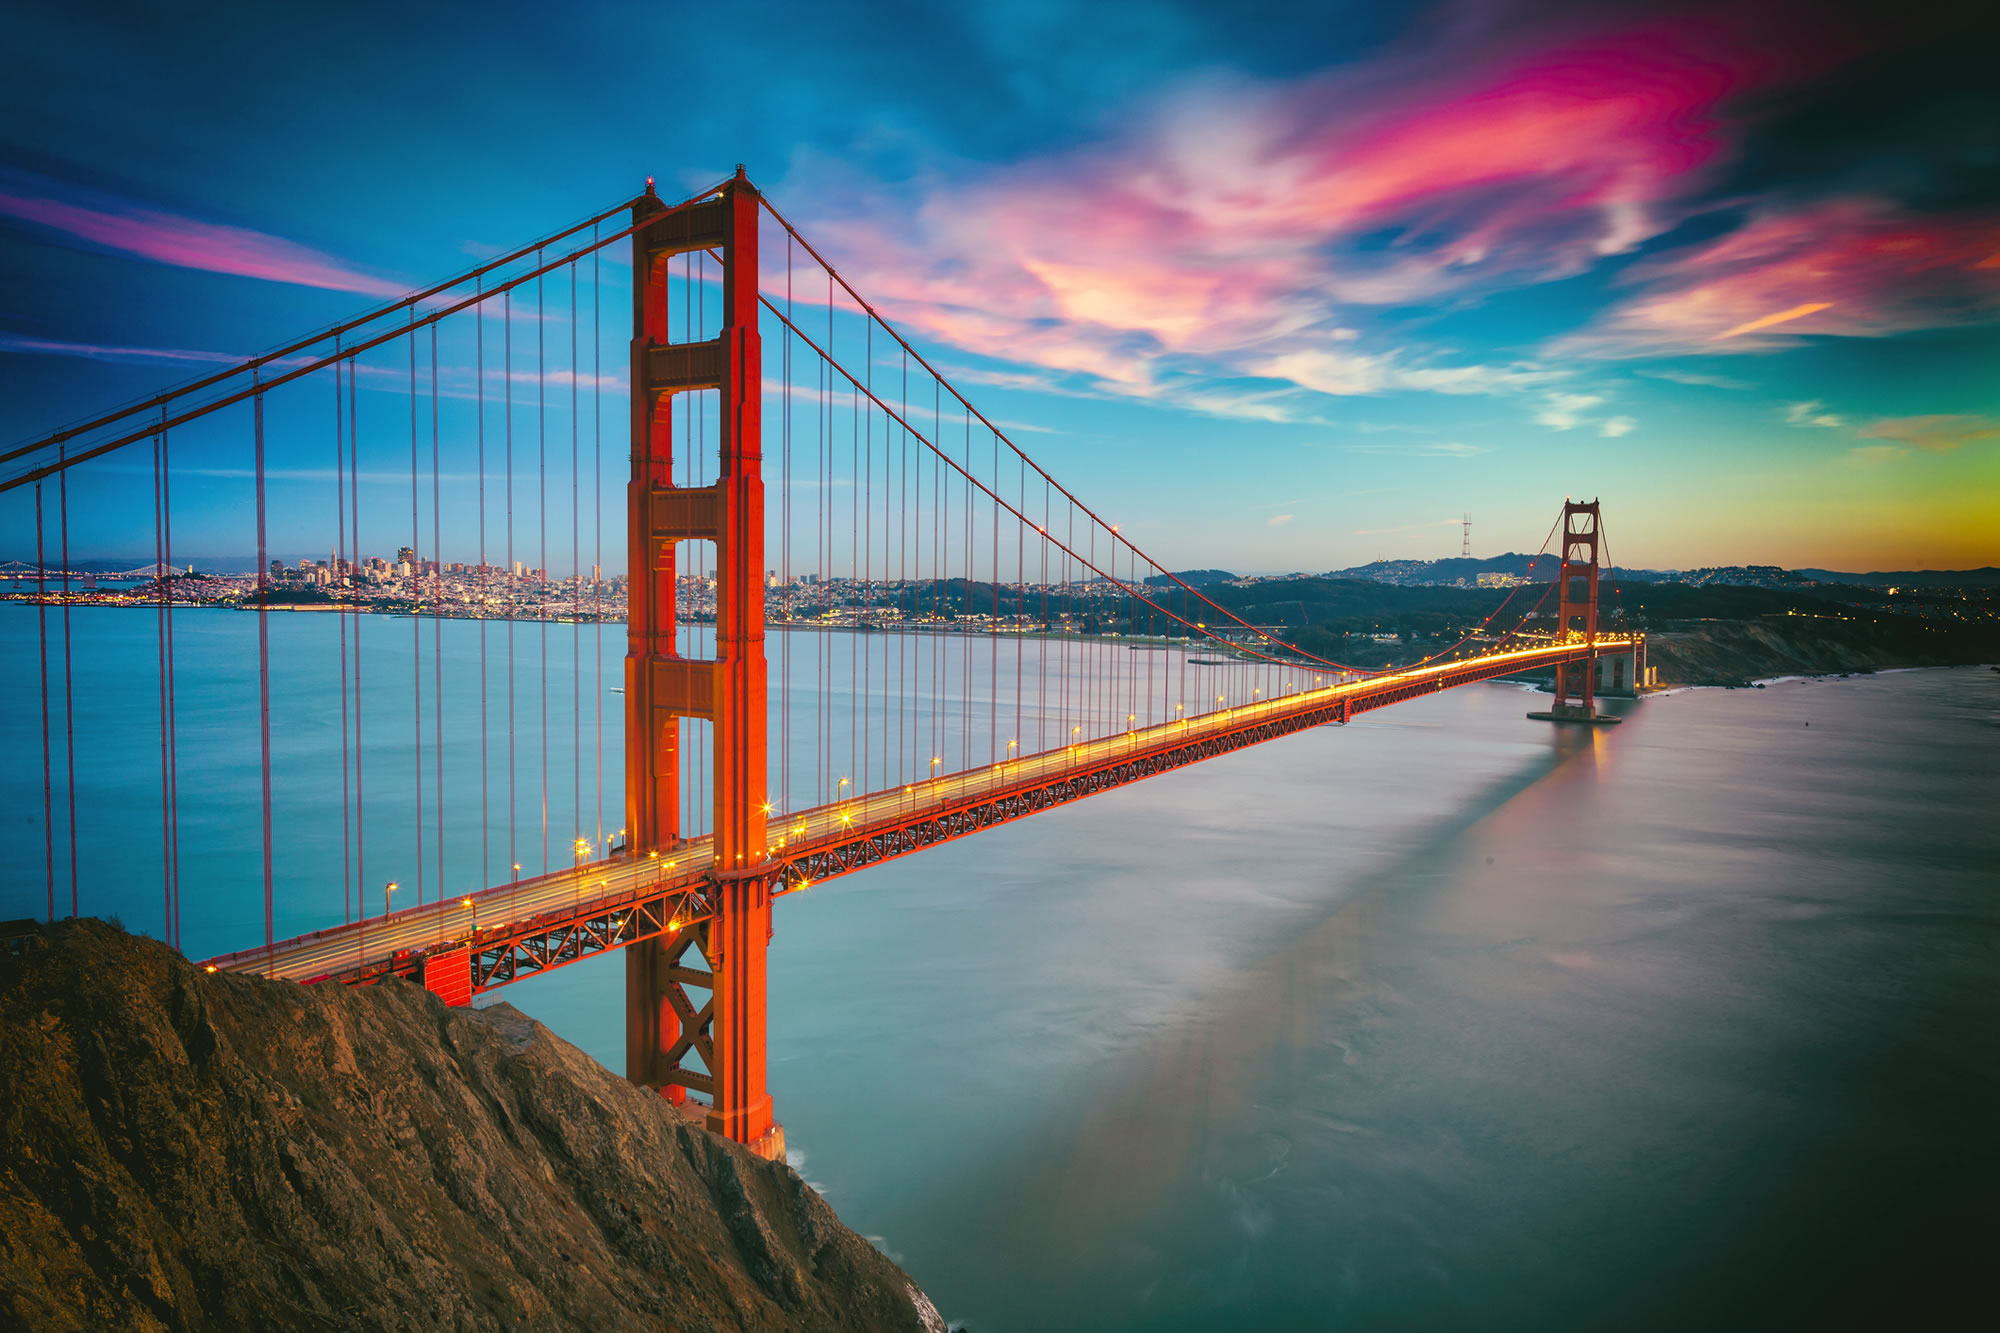 Cycle Across San Francisco’s Golden Gate Bridge